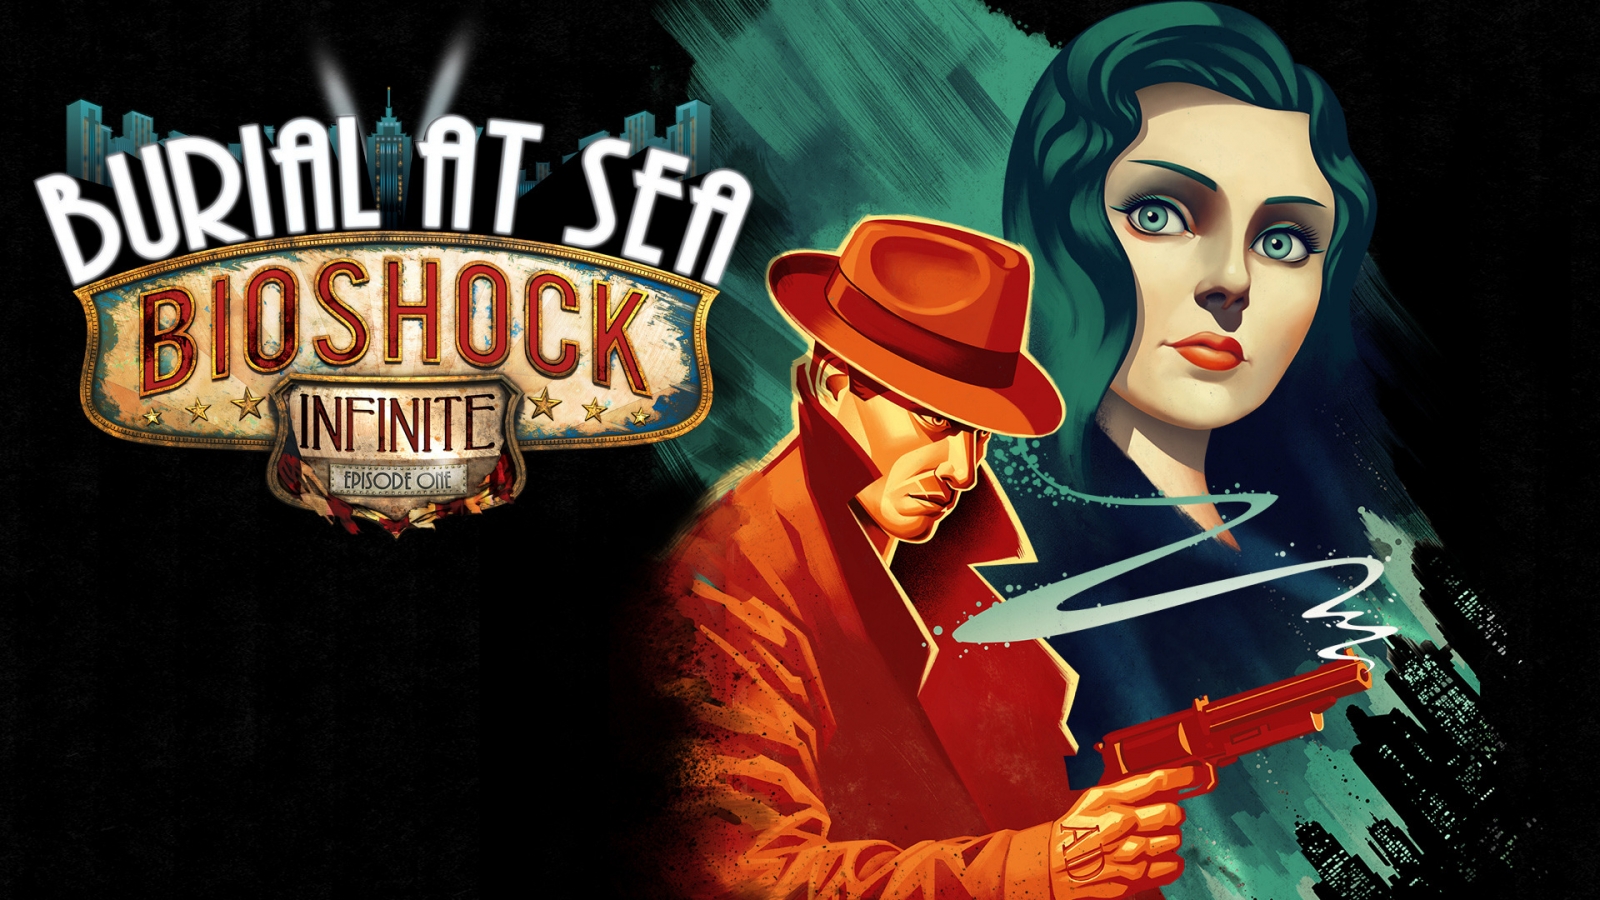 BioShock Infinite Video Game for 1600 x 900 HDTV resolution